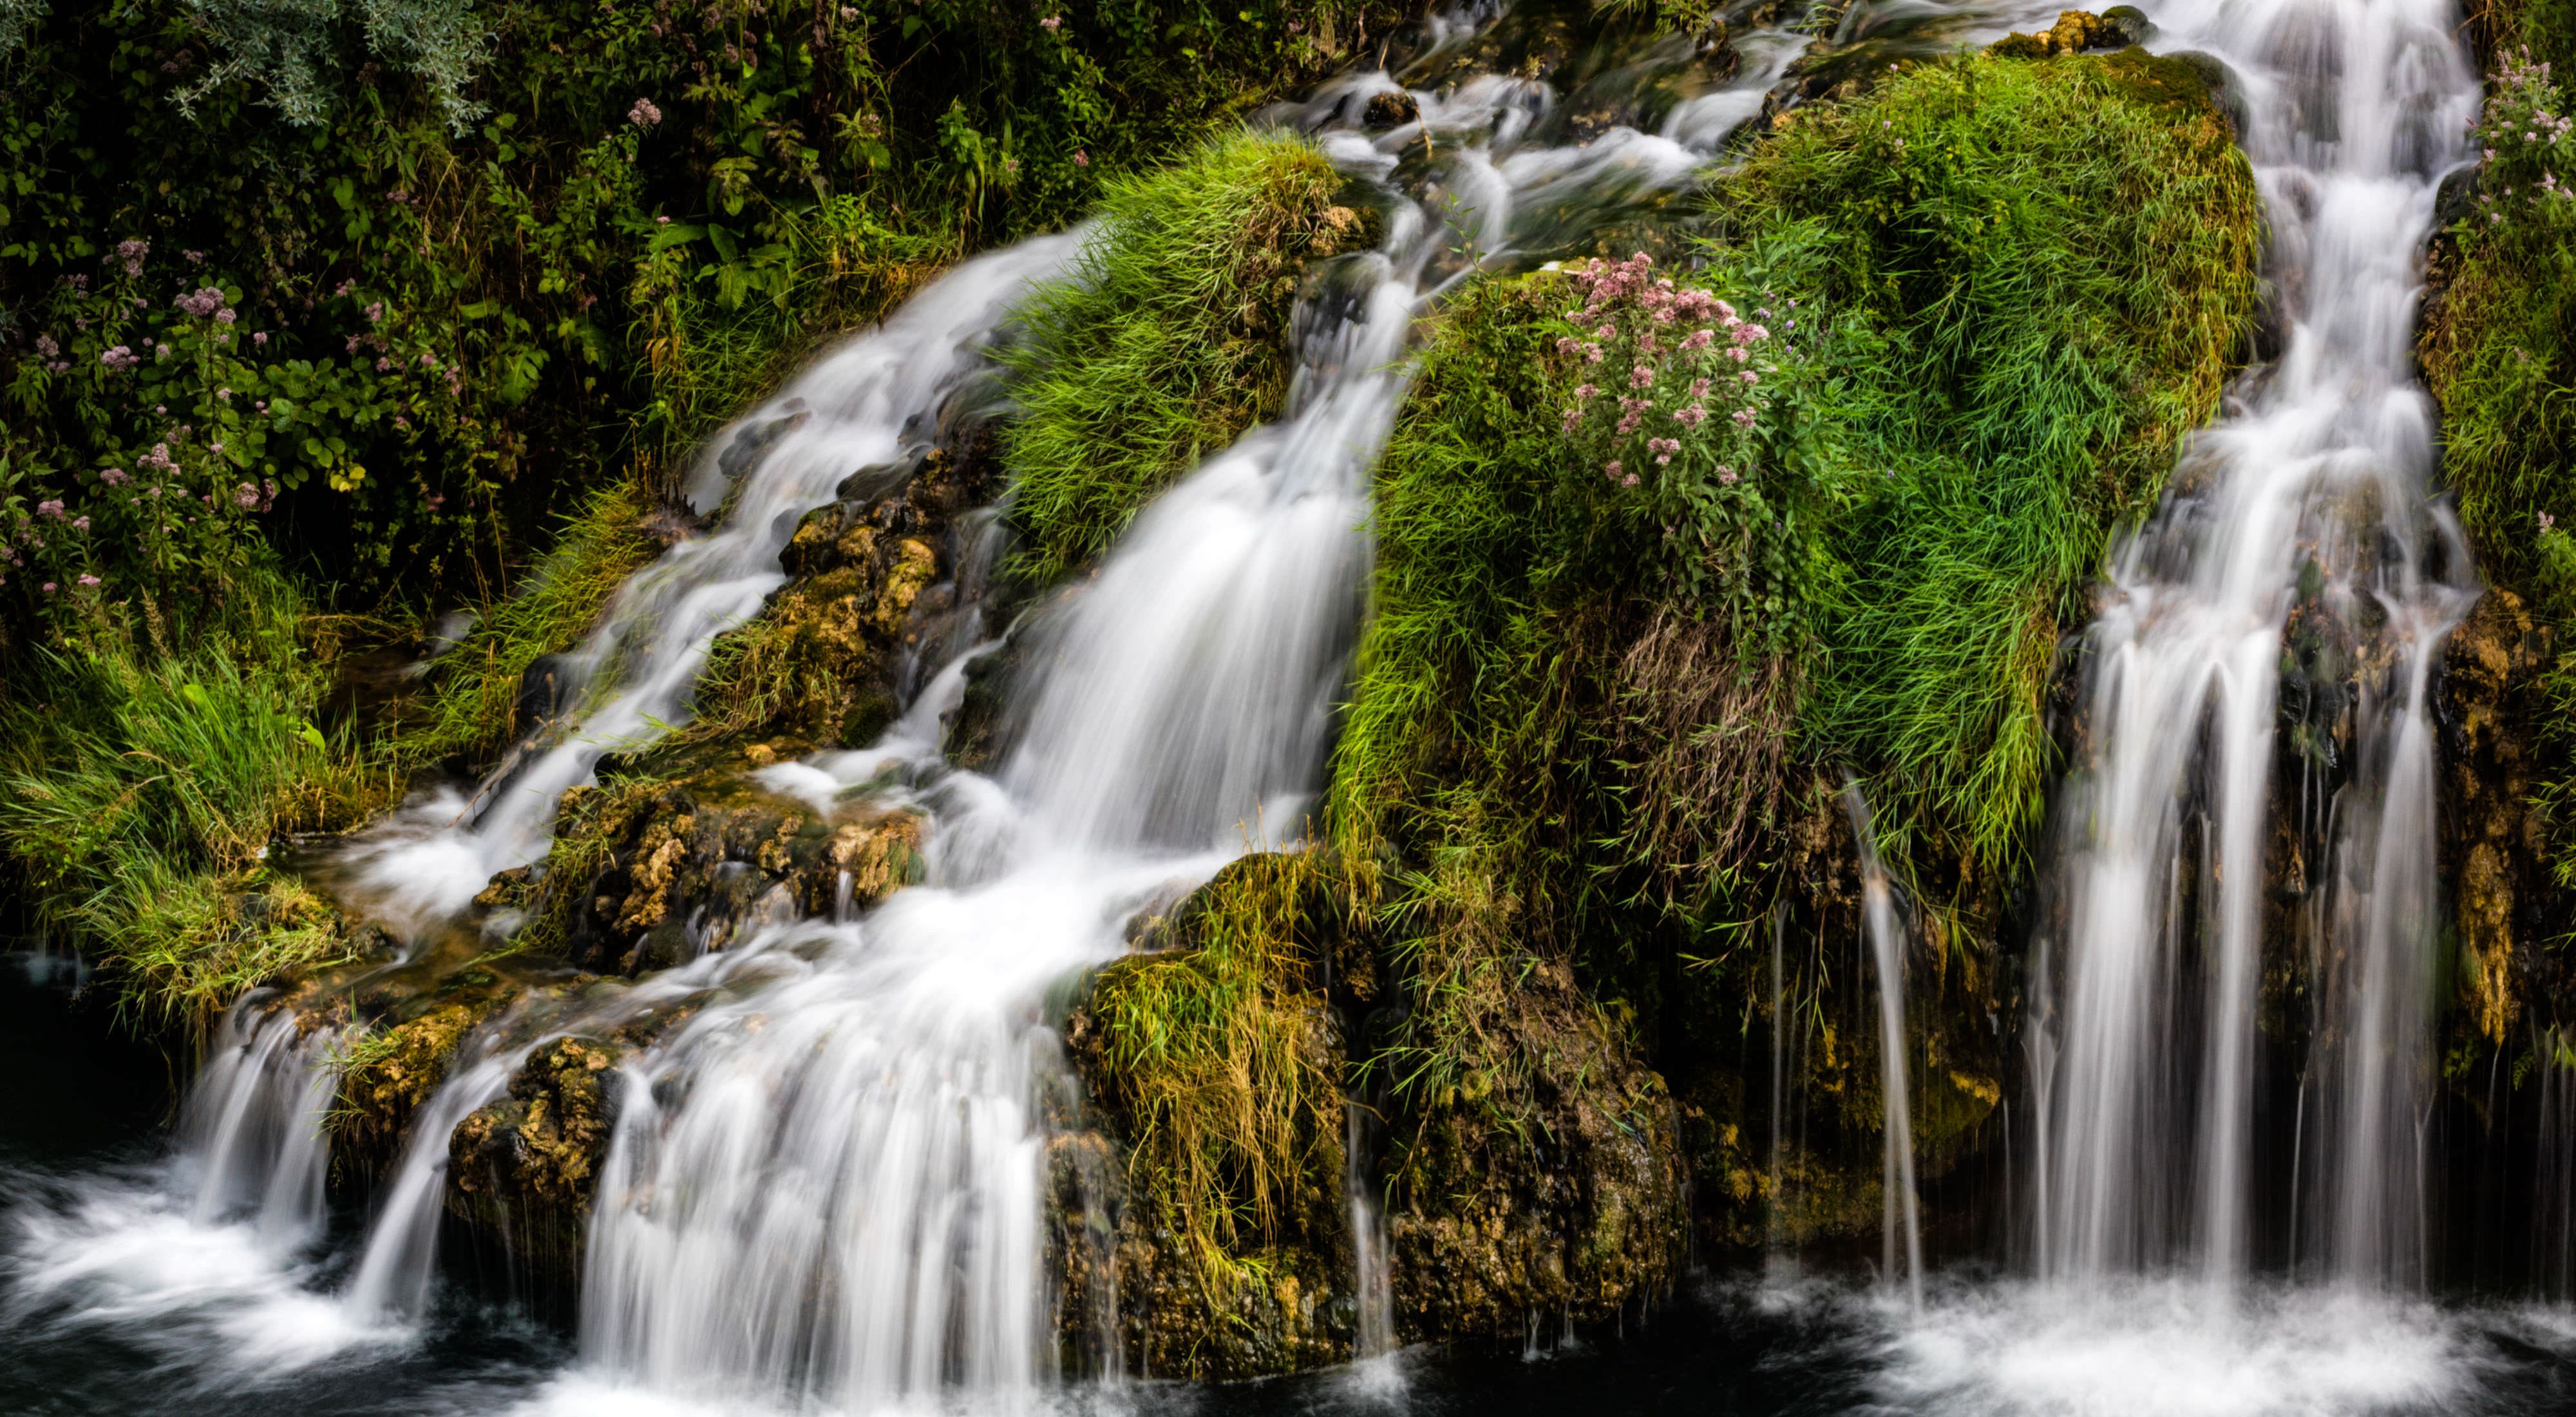 Štrbački buk Waterfalls, Croatia